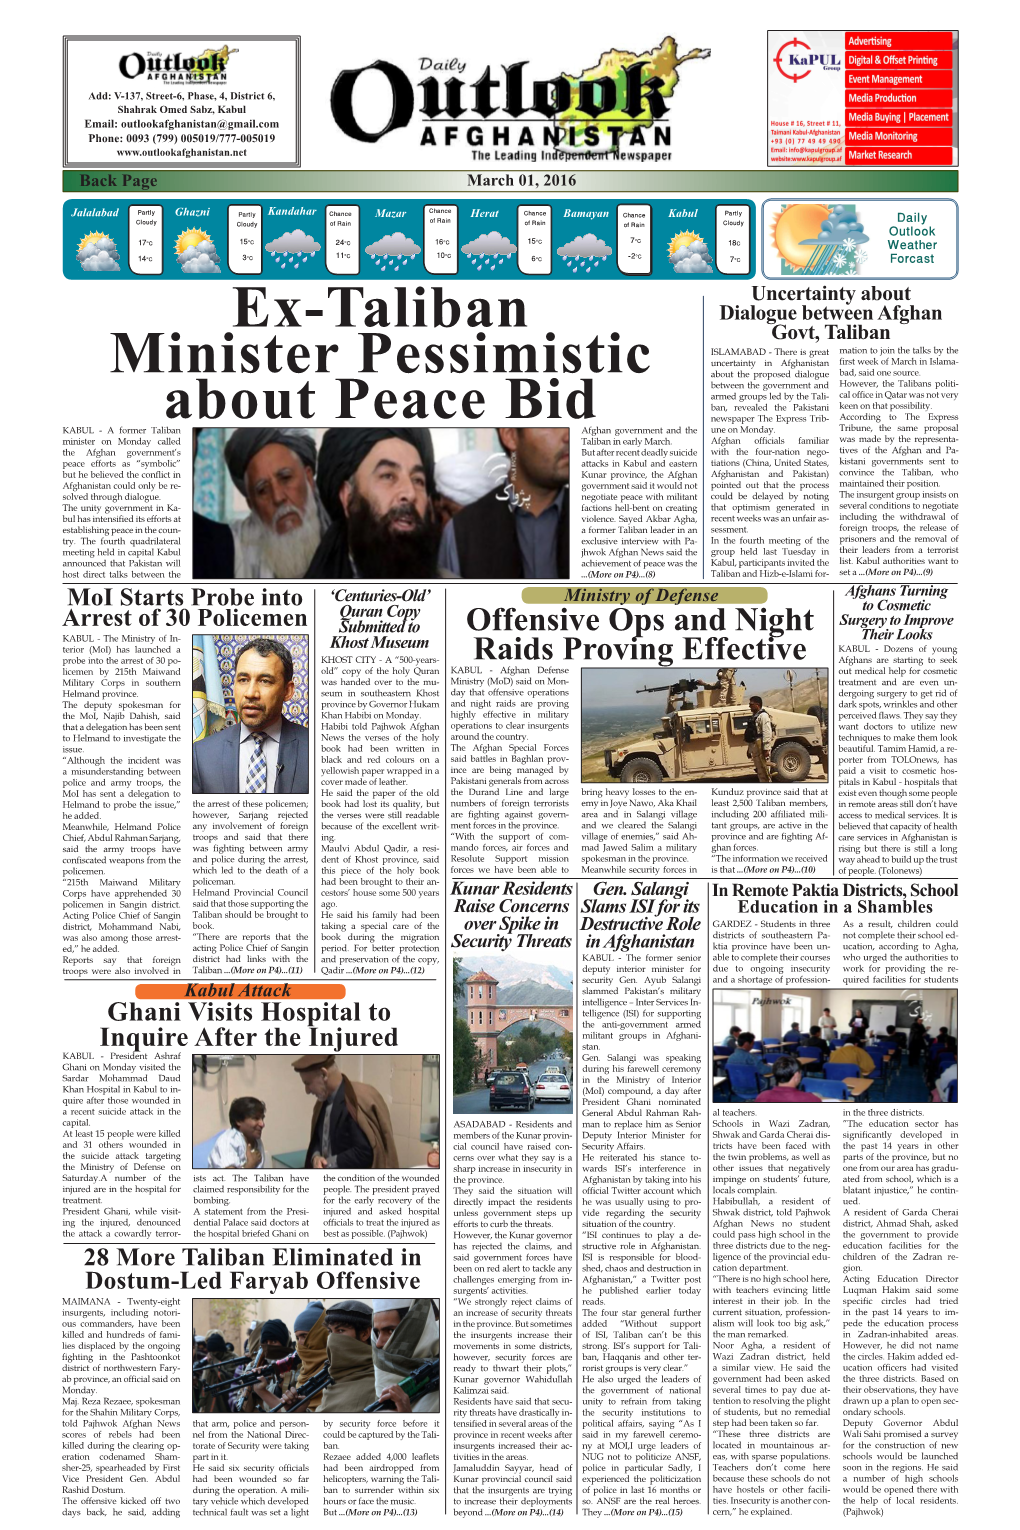 Ex-Taliban Minister Pessimistic About Peace